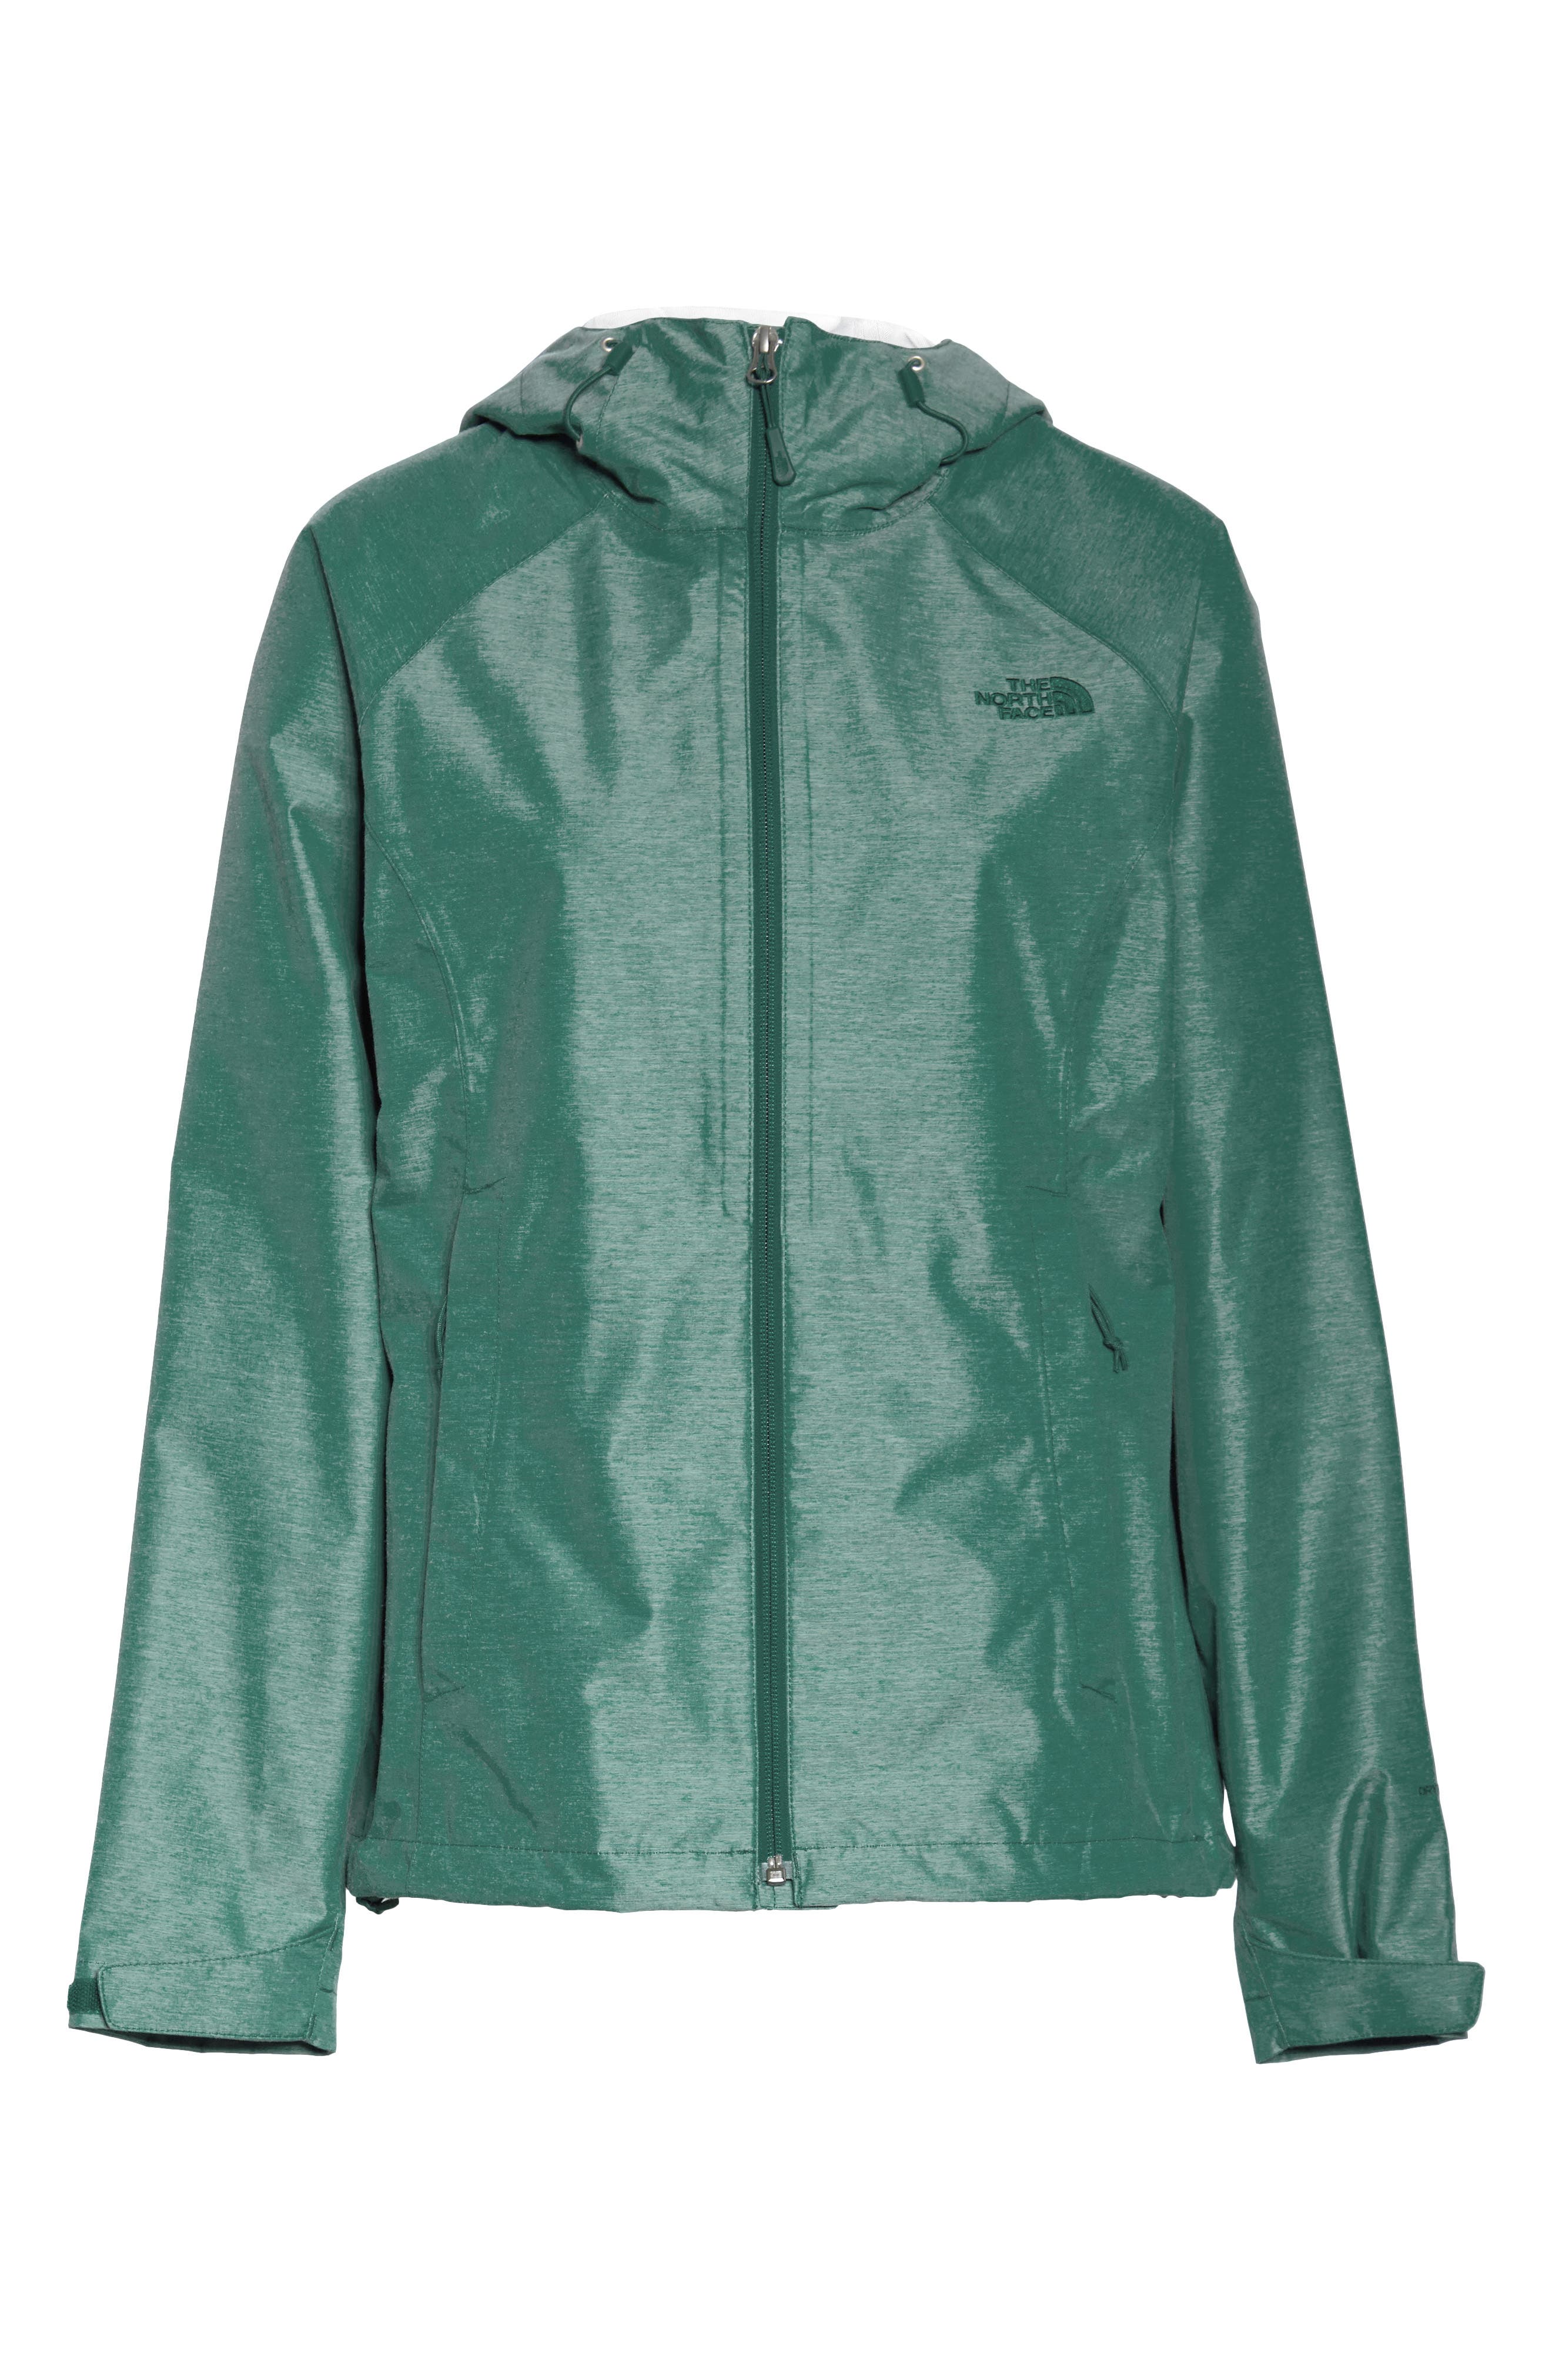 magnolia waterproof rain jacket